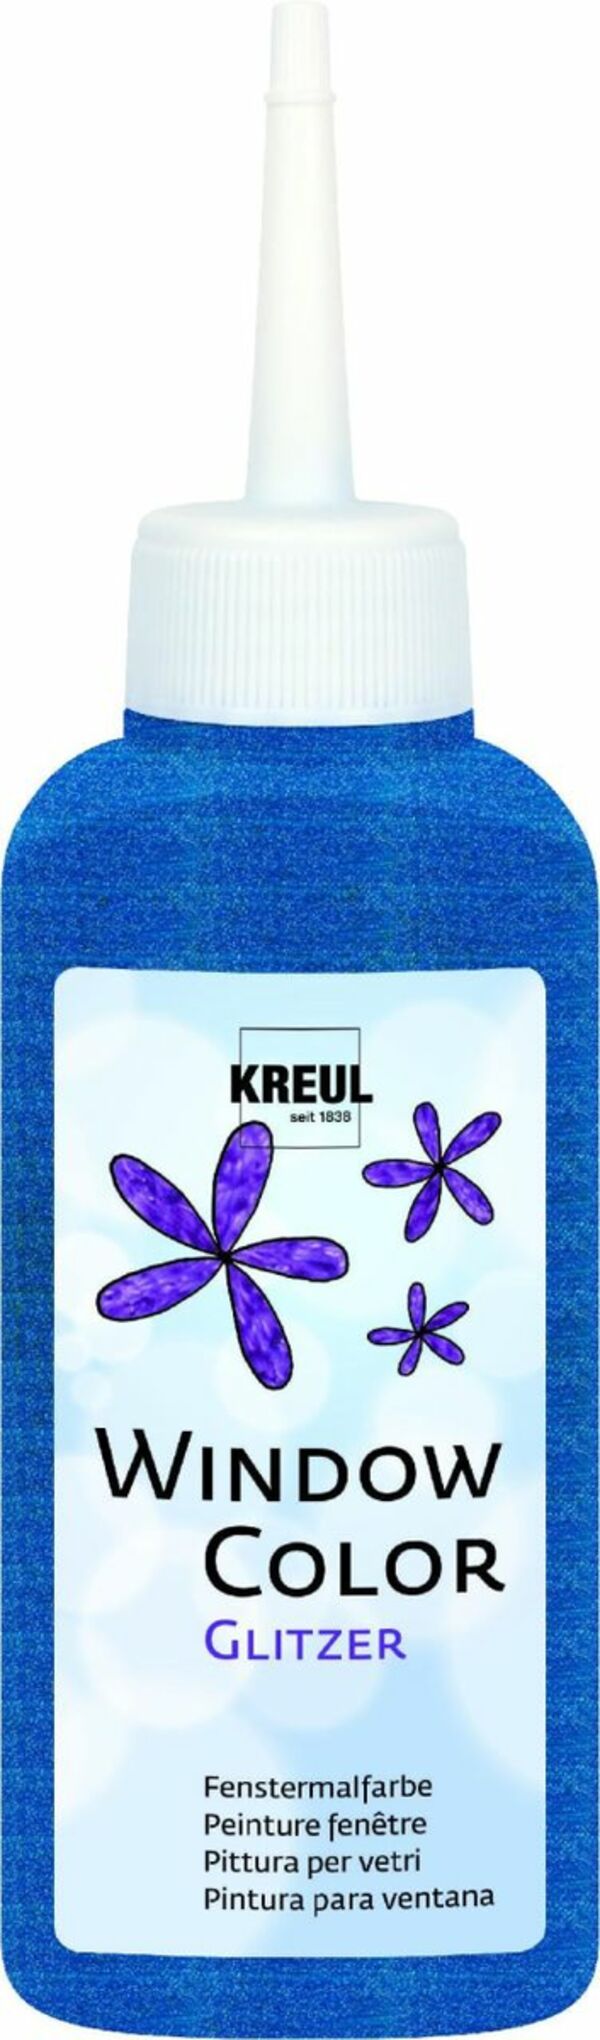 Bild 1 von Kreul Window Color
, 
Glitzer-diamantblau,  80 ml